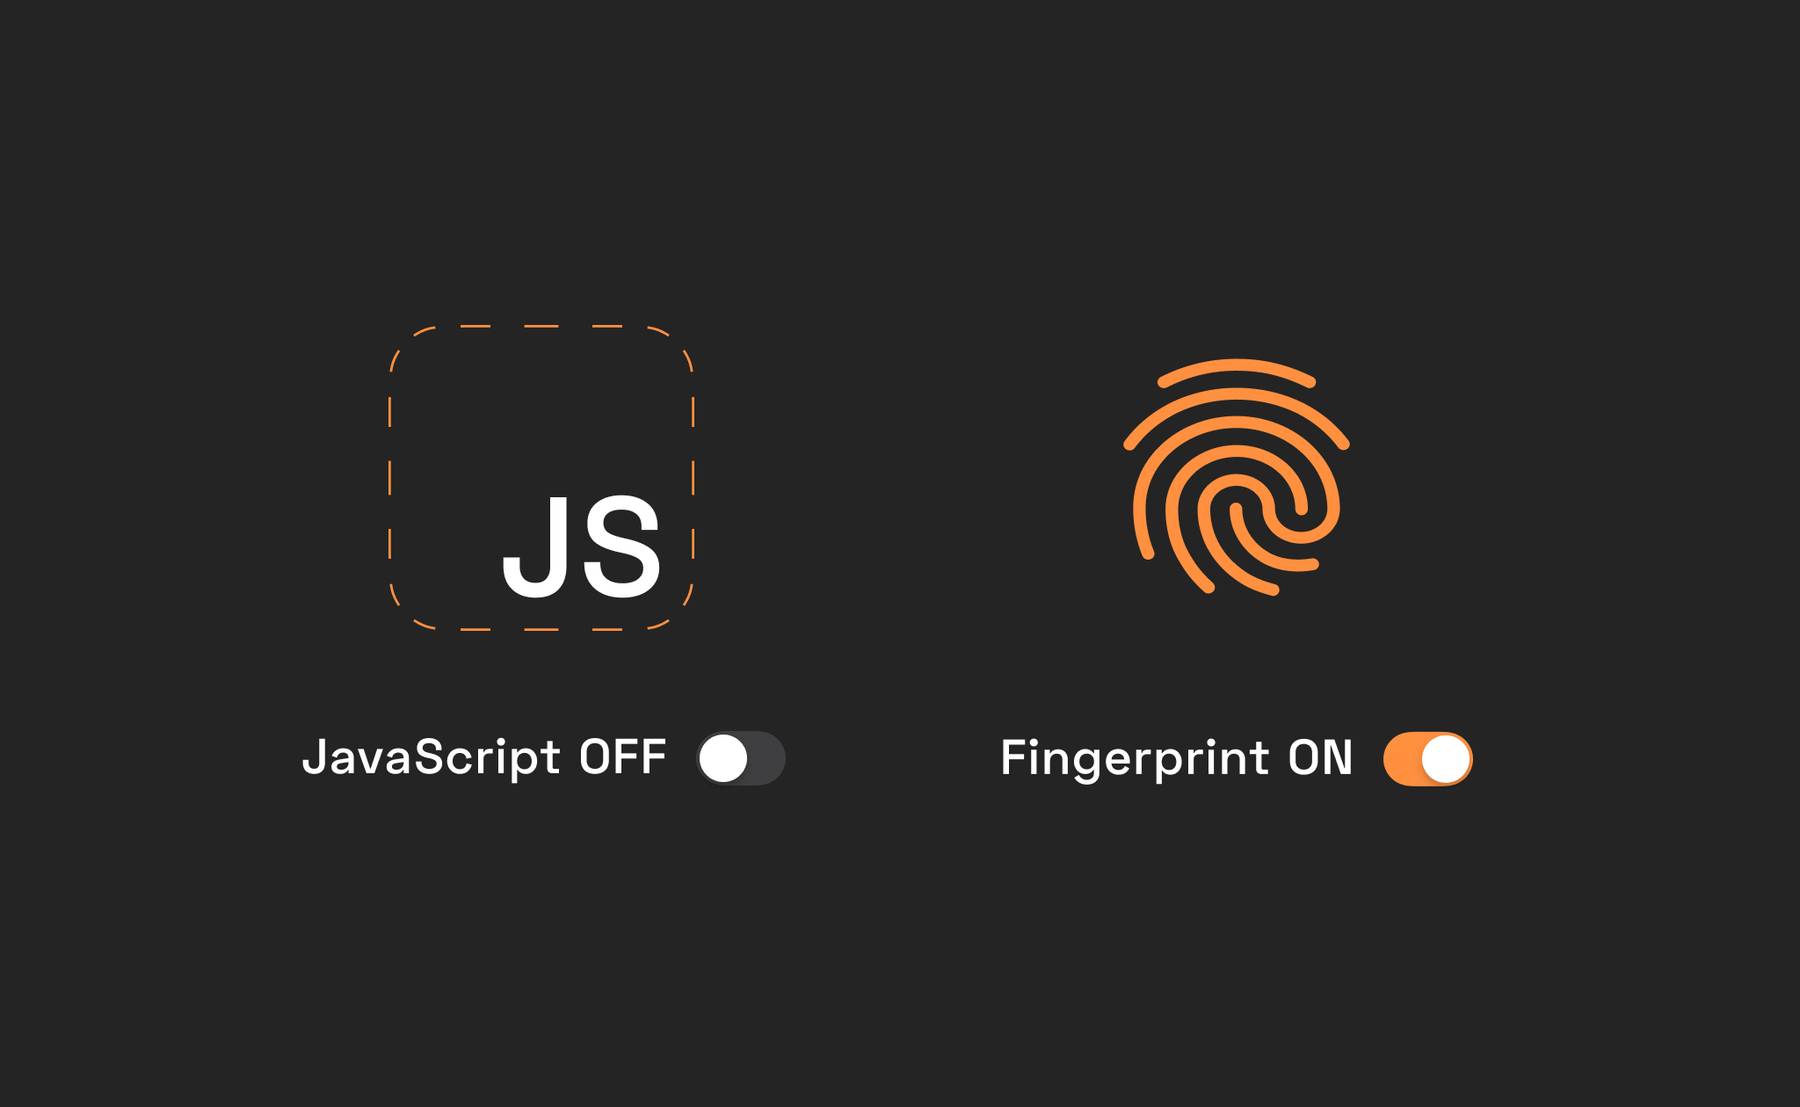 Demo: Disabling JavaScript Won’t Save You from Fingerprinting